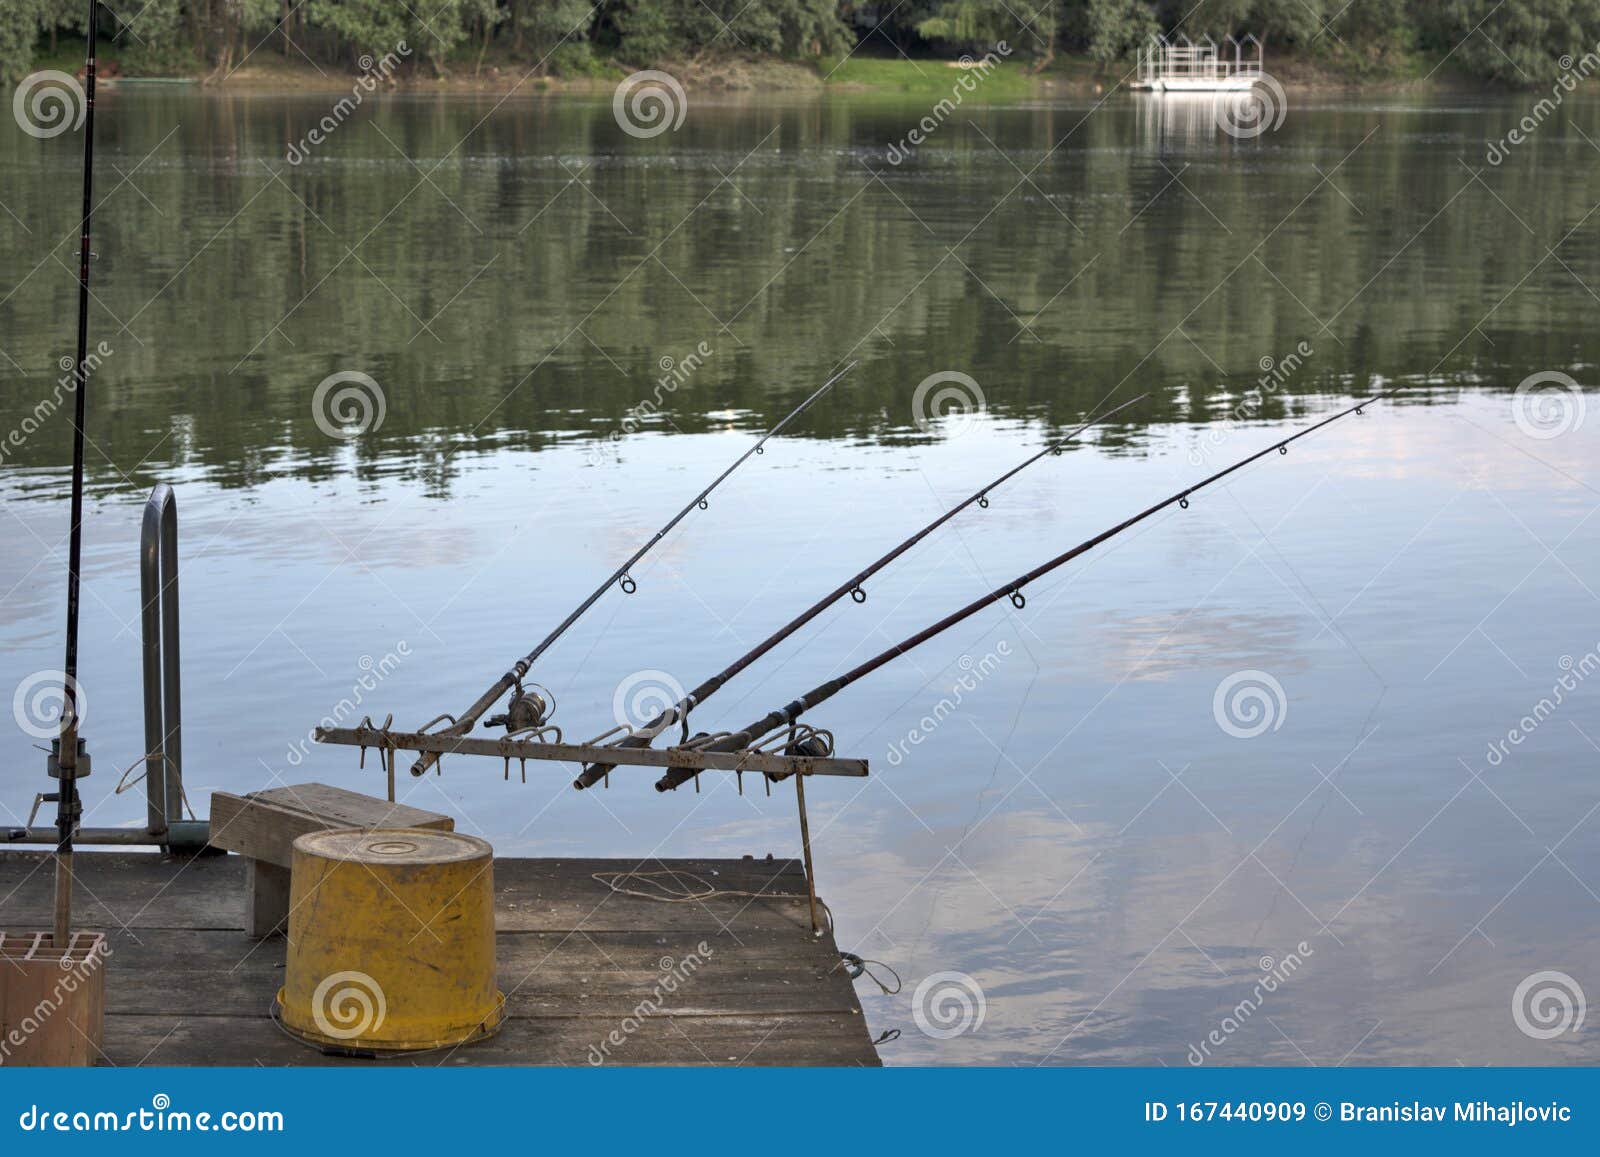 Fishing platform stock image. Image of lake, calm, privacy - 167440909